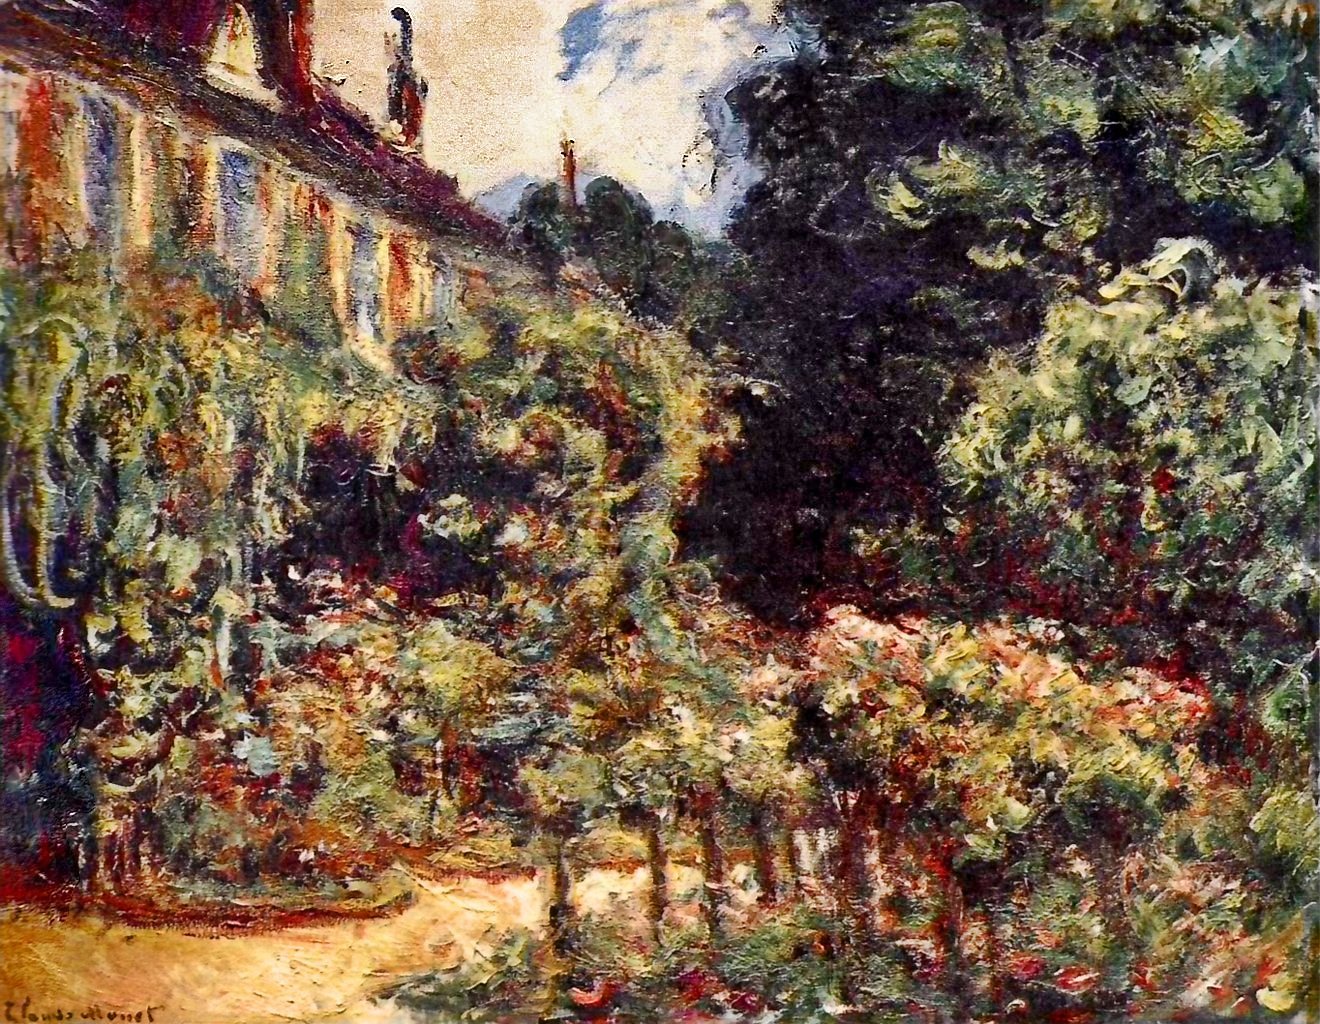 Claude+Monet-1840-1926 (368).jpg